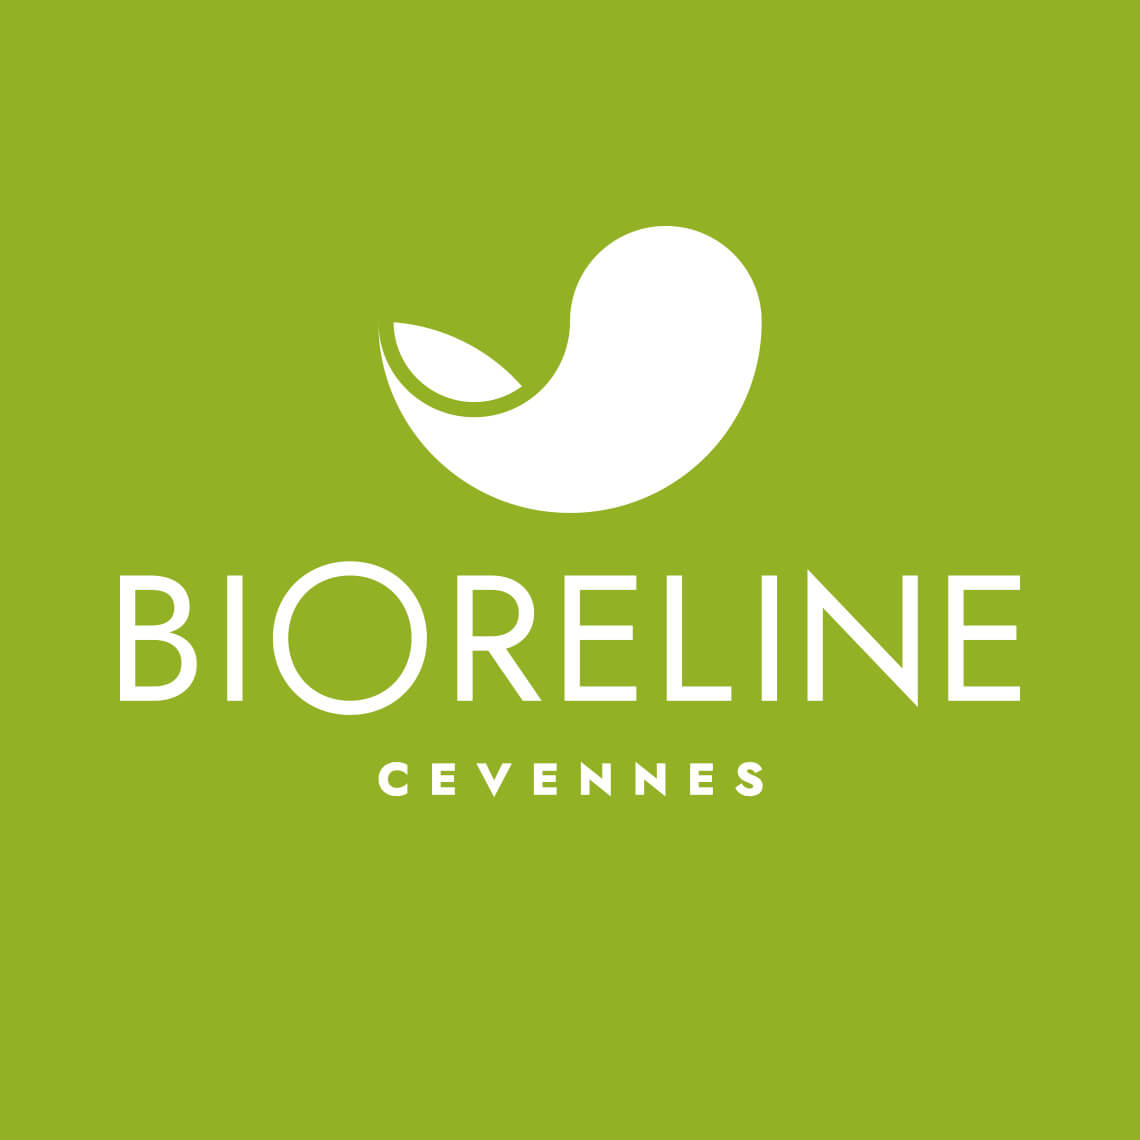 Design du nouveau logo Bioreline